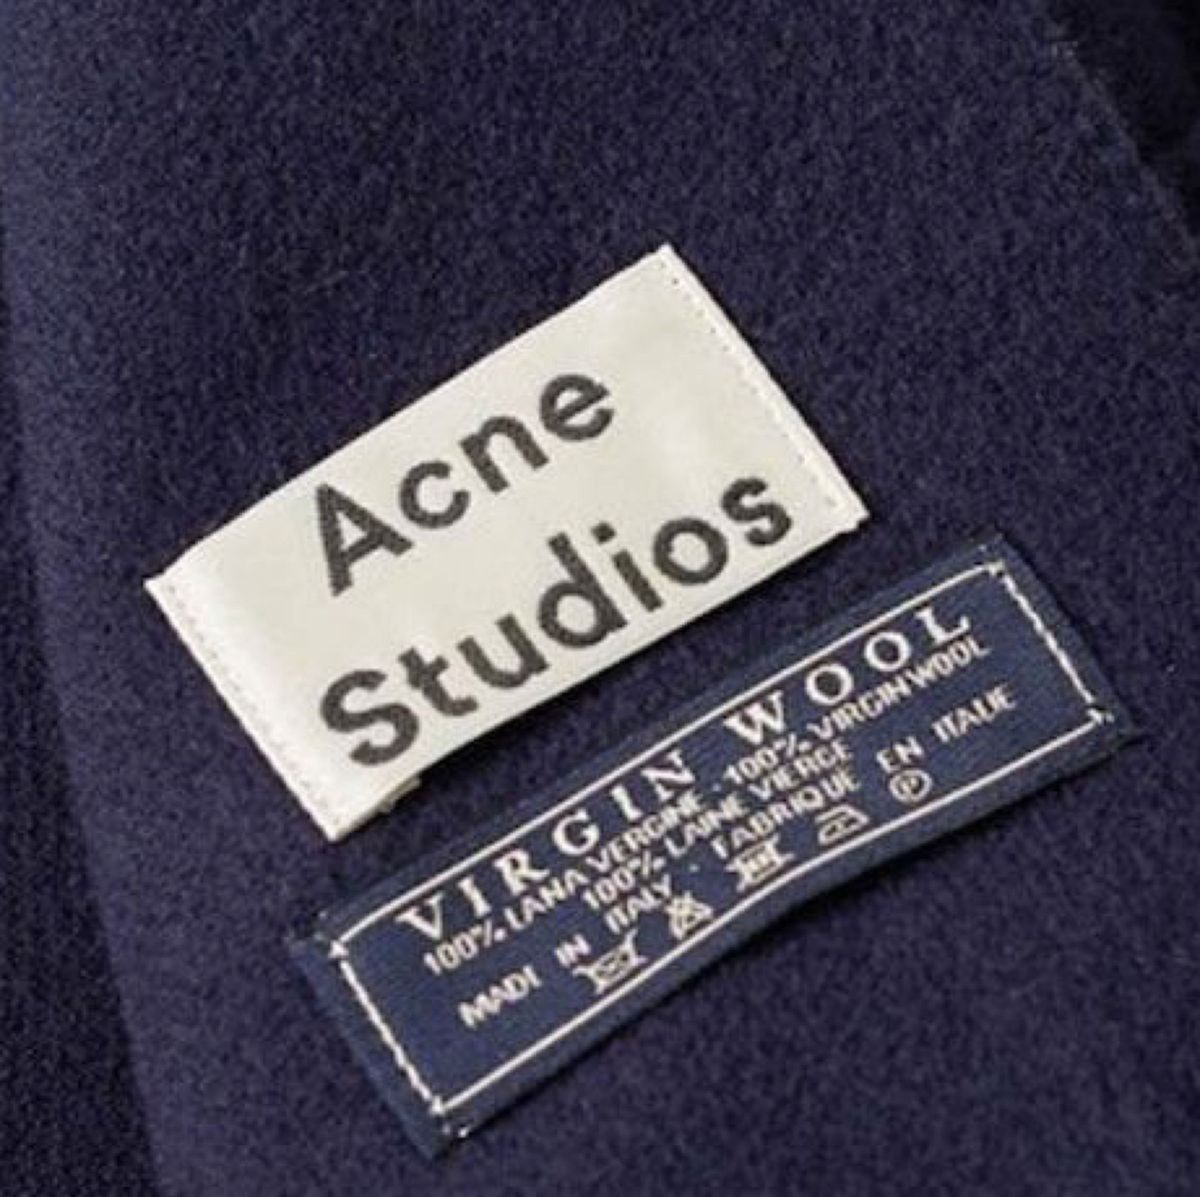 Acne Studios canada stole